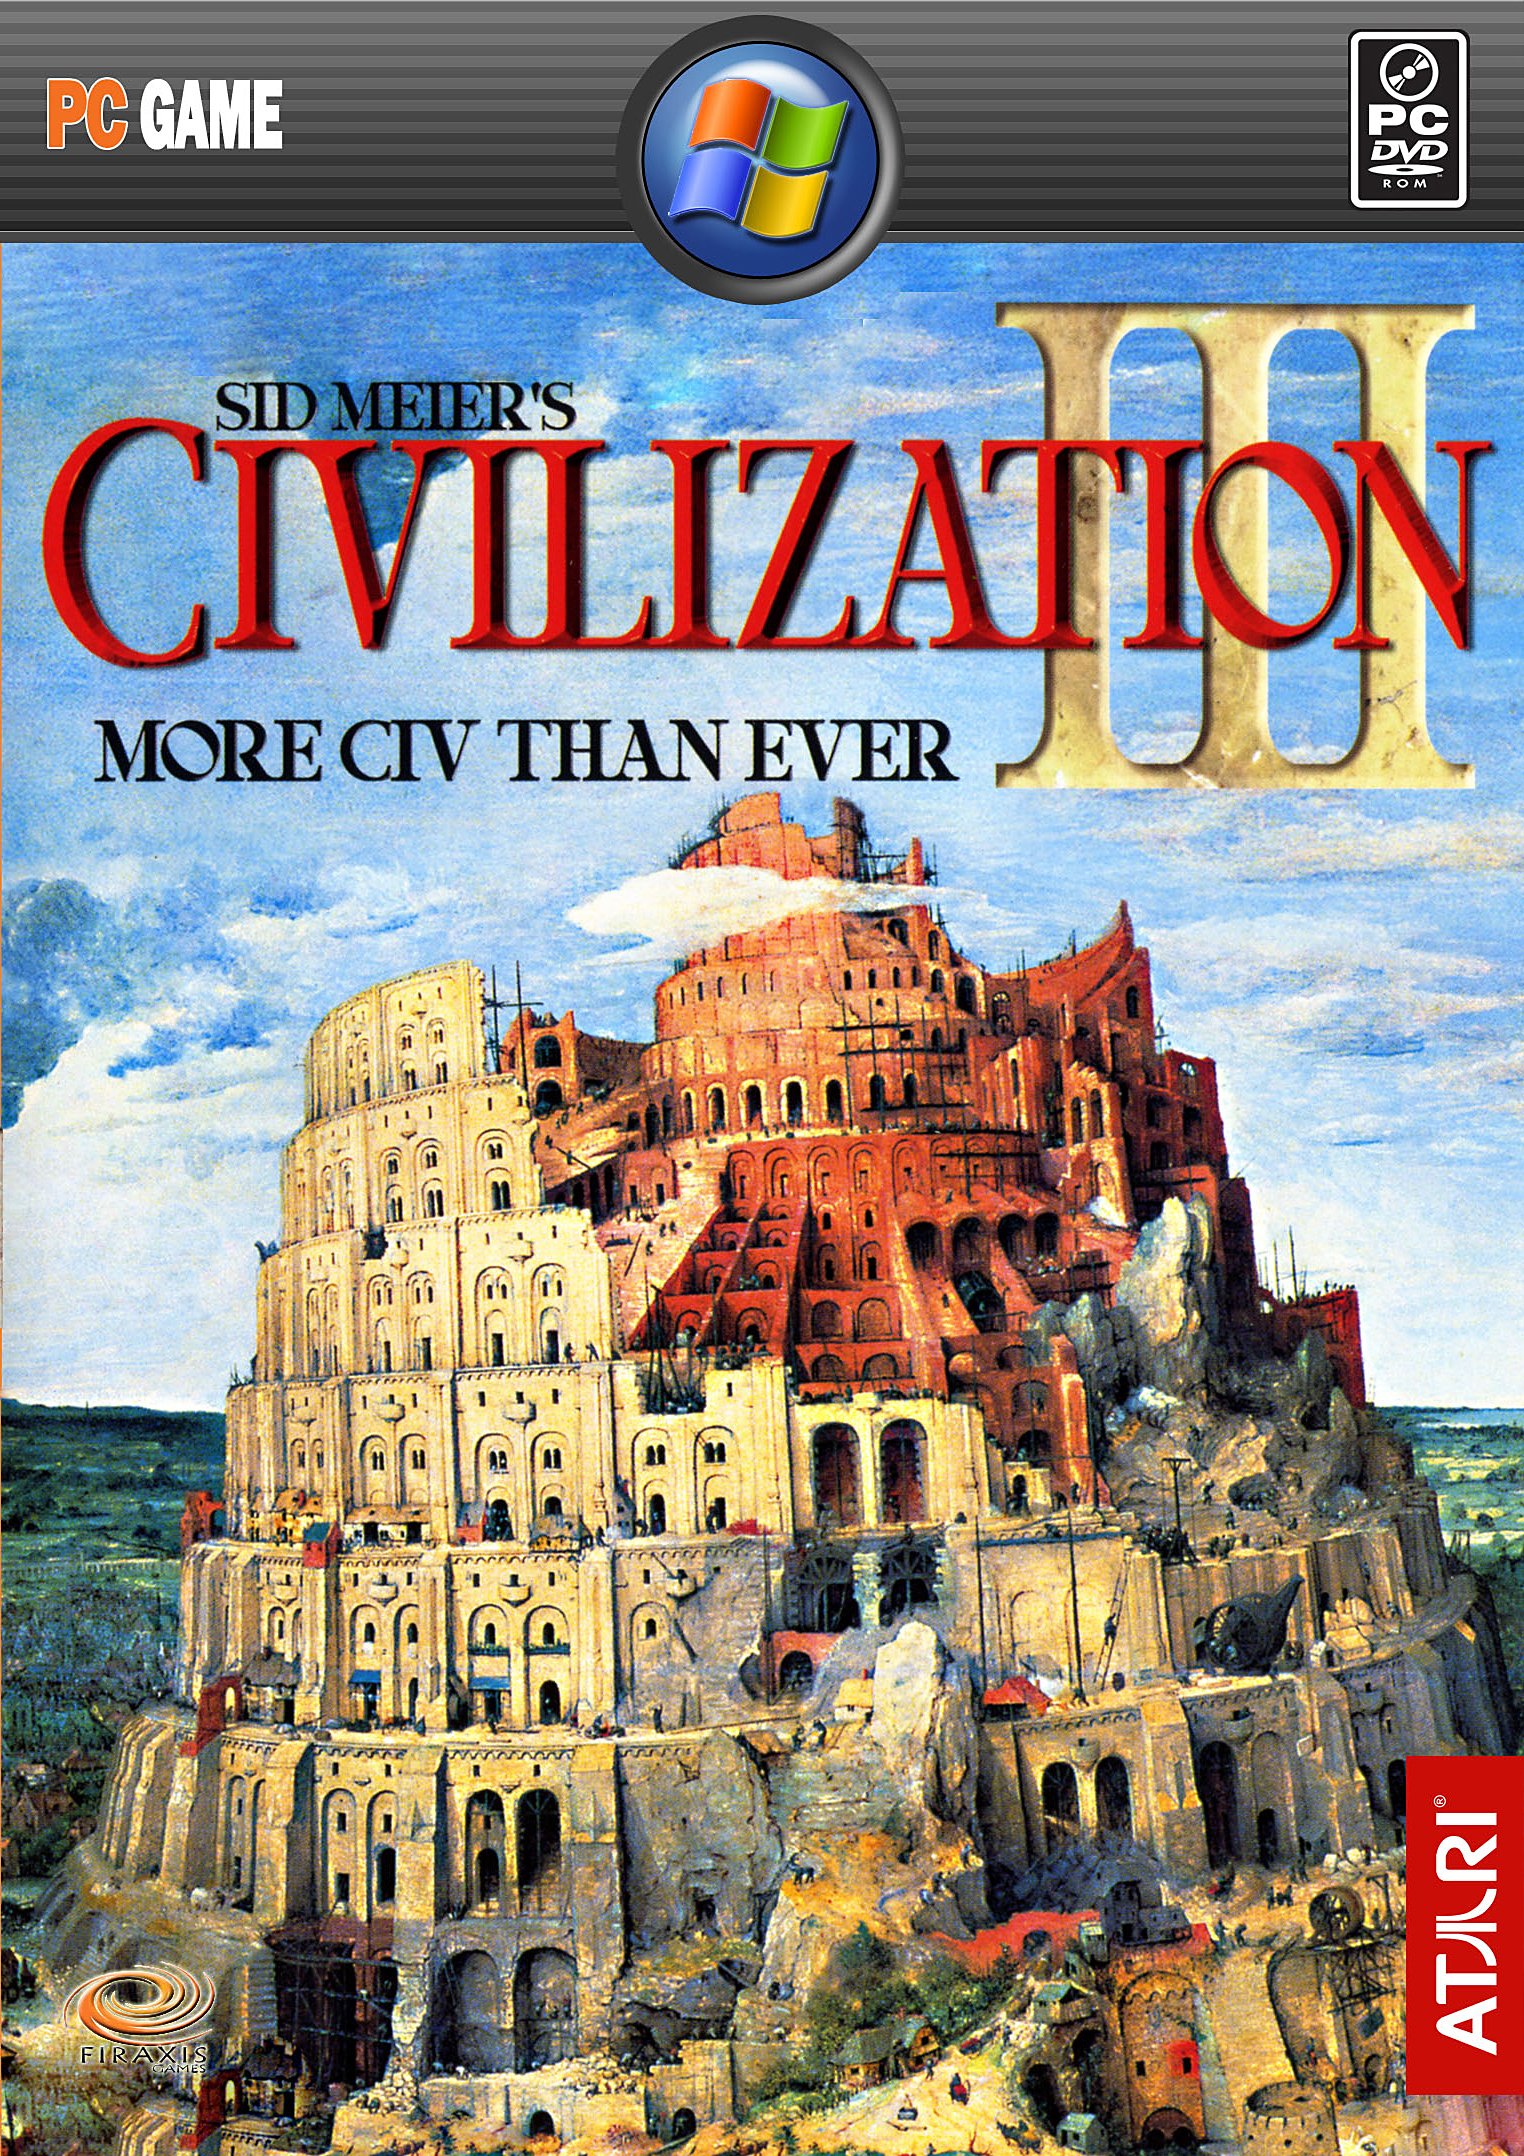 download the new Sid Meier’s Civilization III